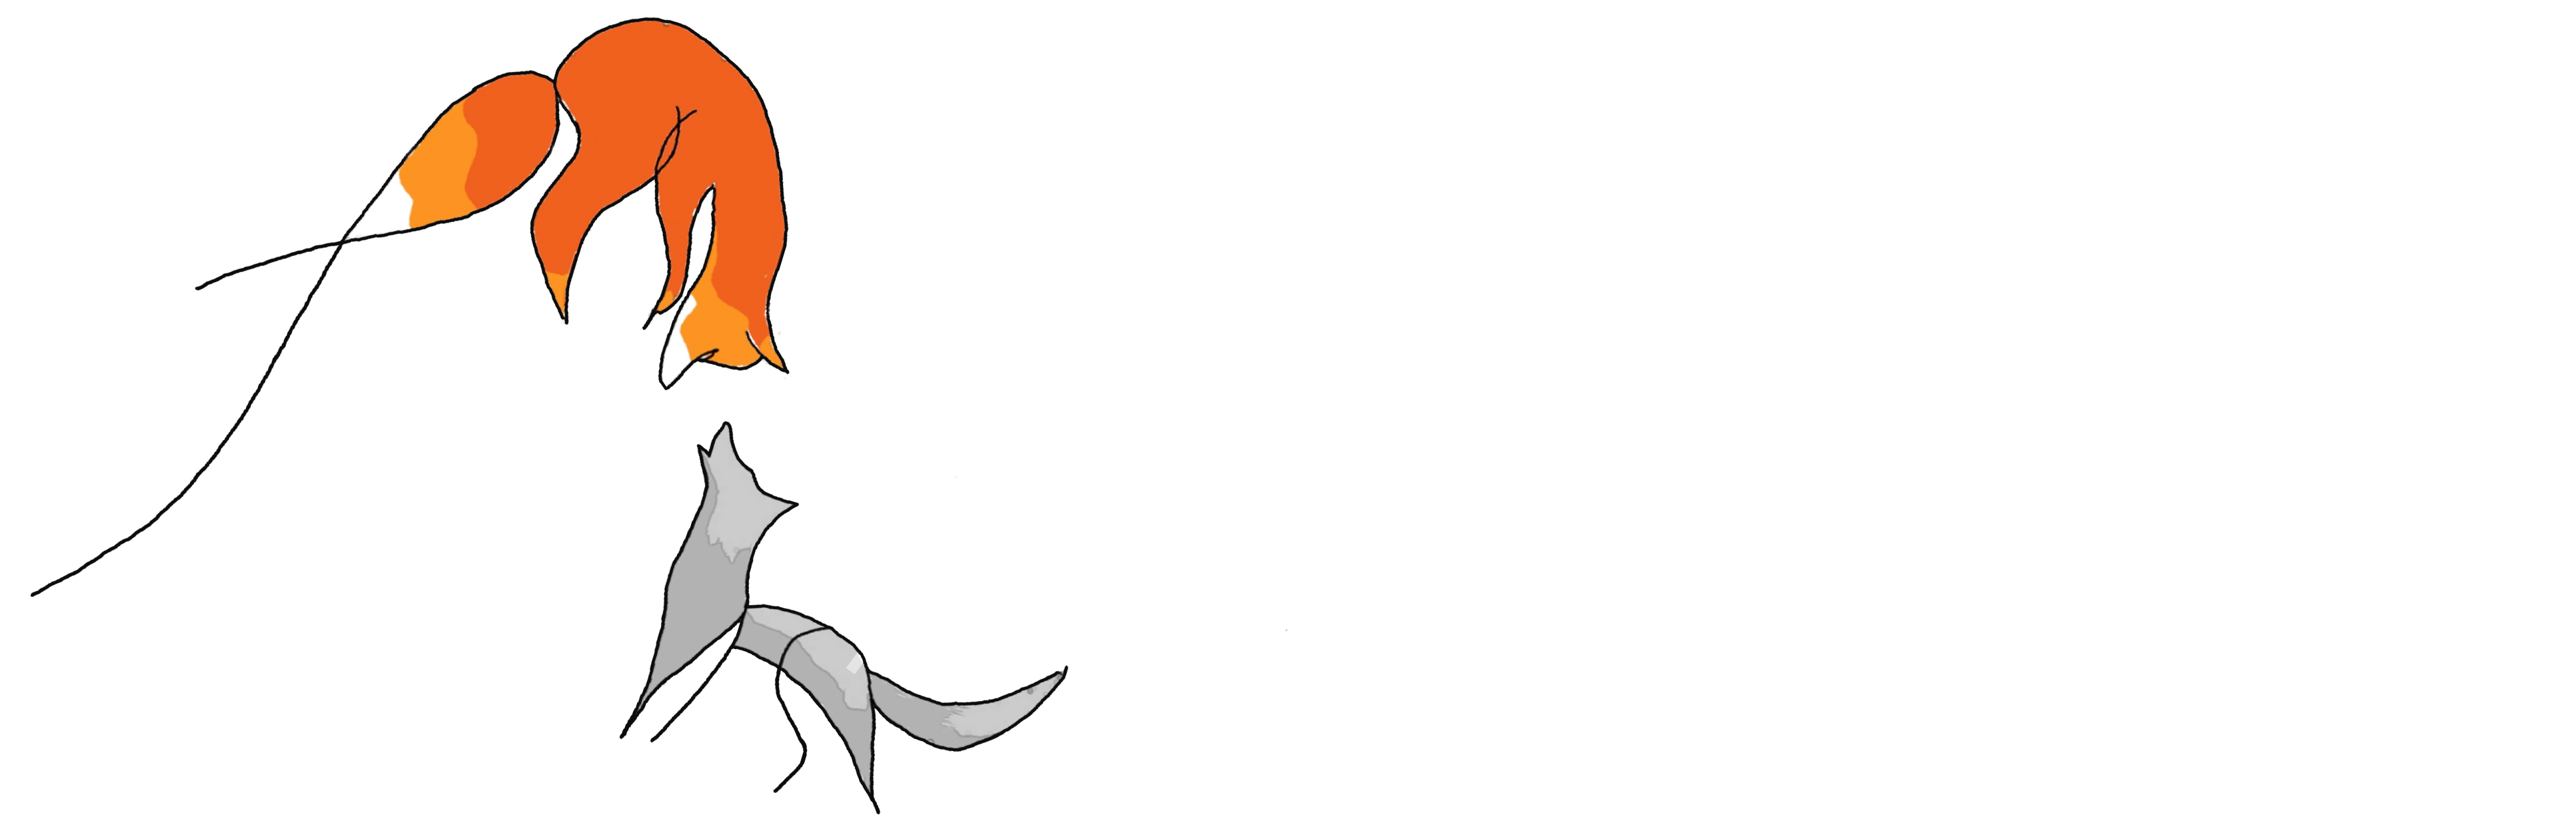 Fox Wolf